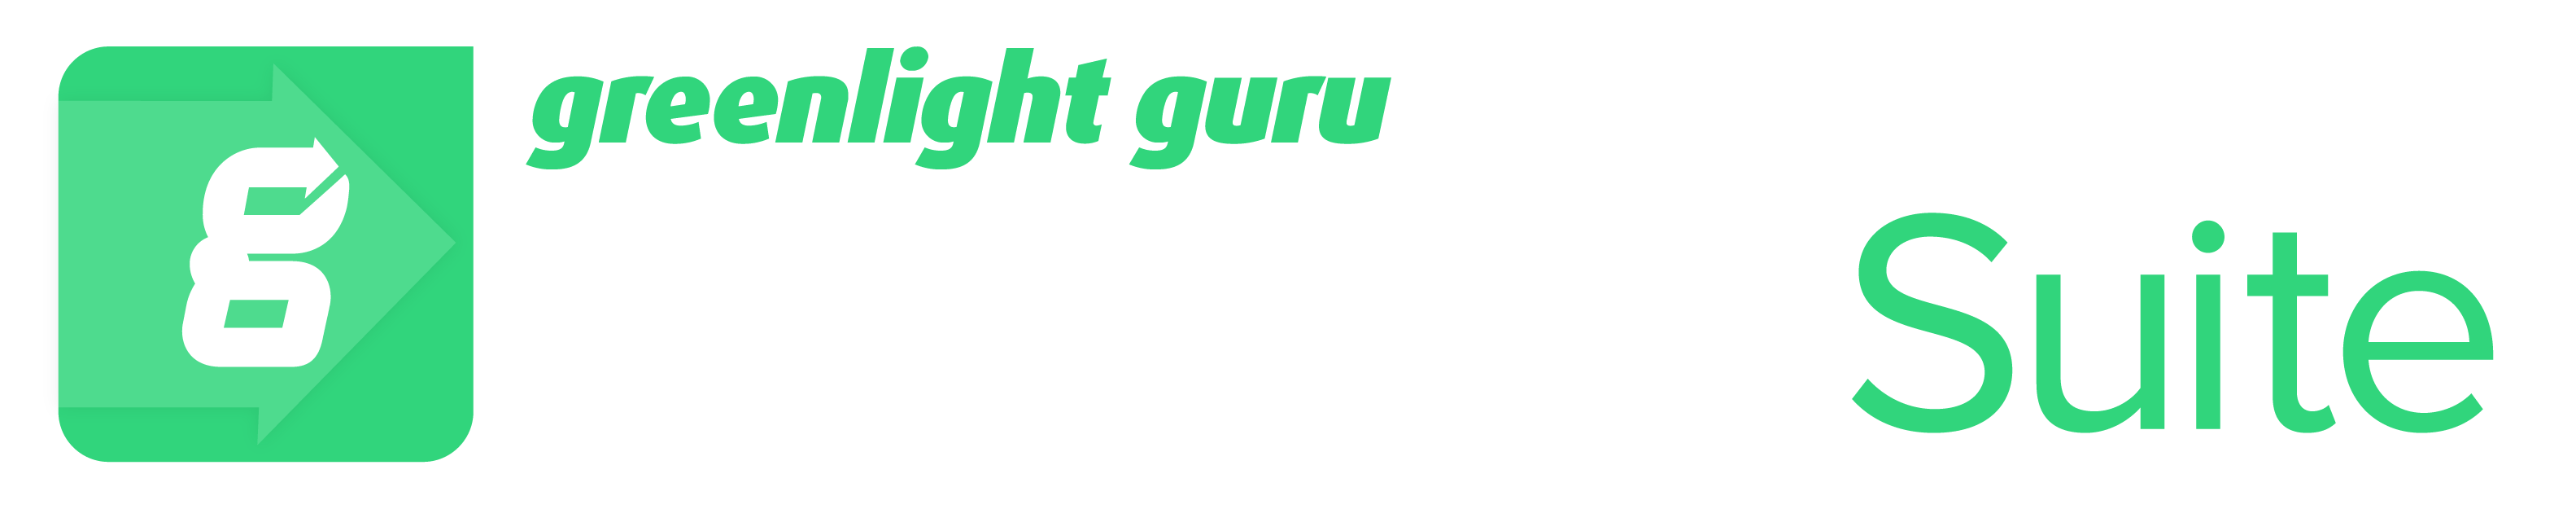 homepage greenlight guru medtech suite logo